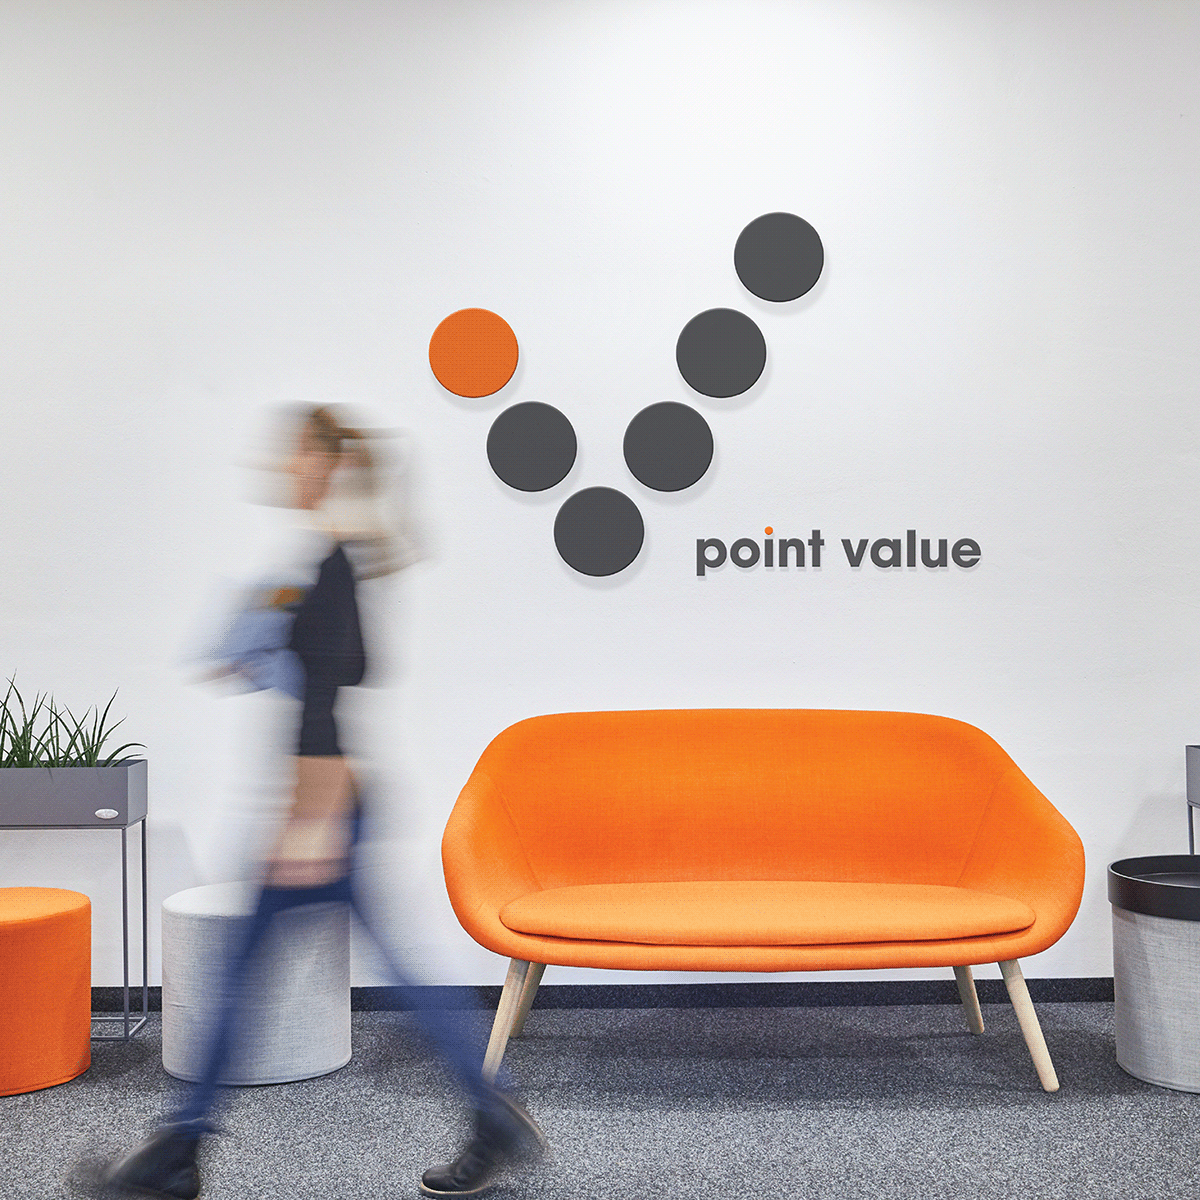 point value business research economic center consultancy brand logo branding 